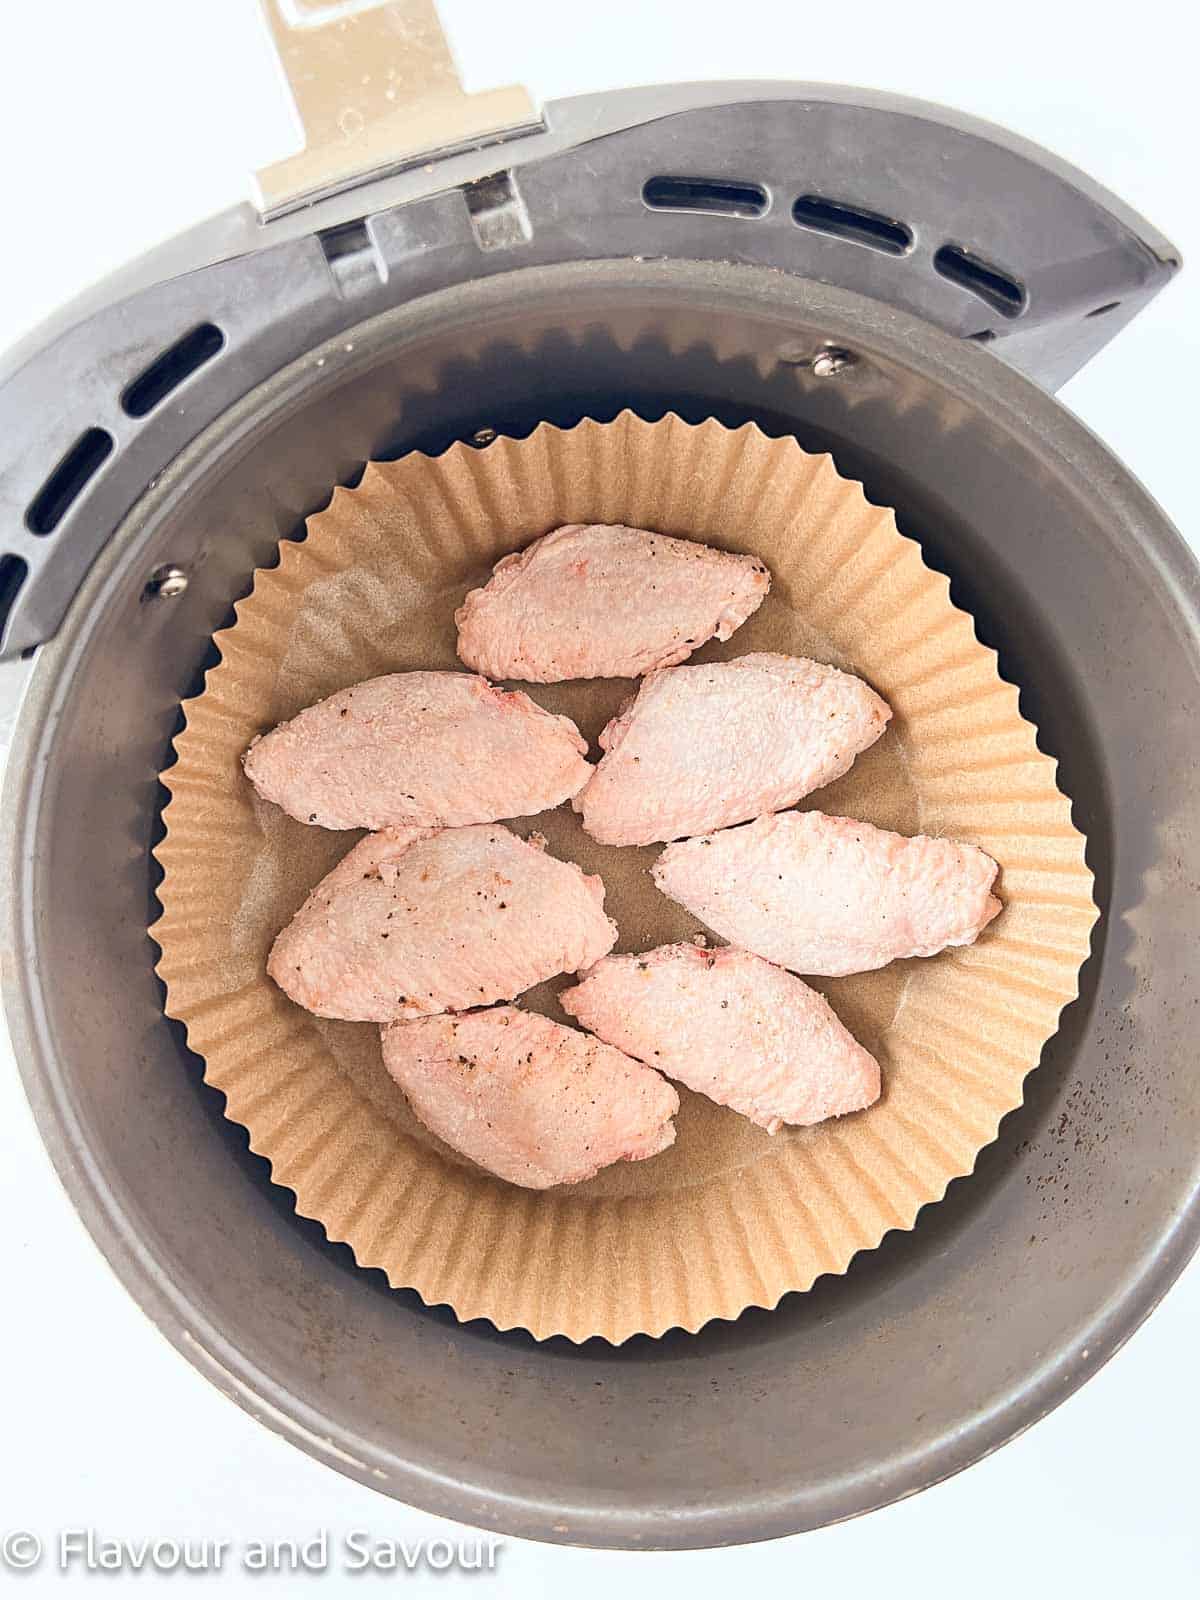 Chicken wings in an air fryer basket.